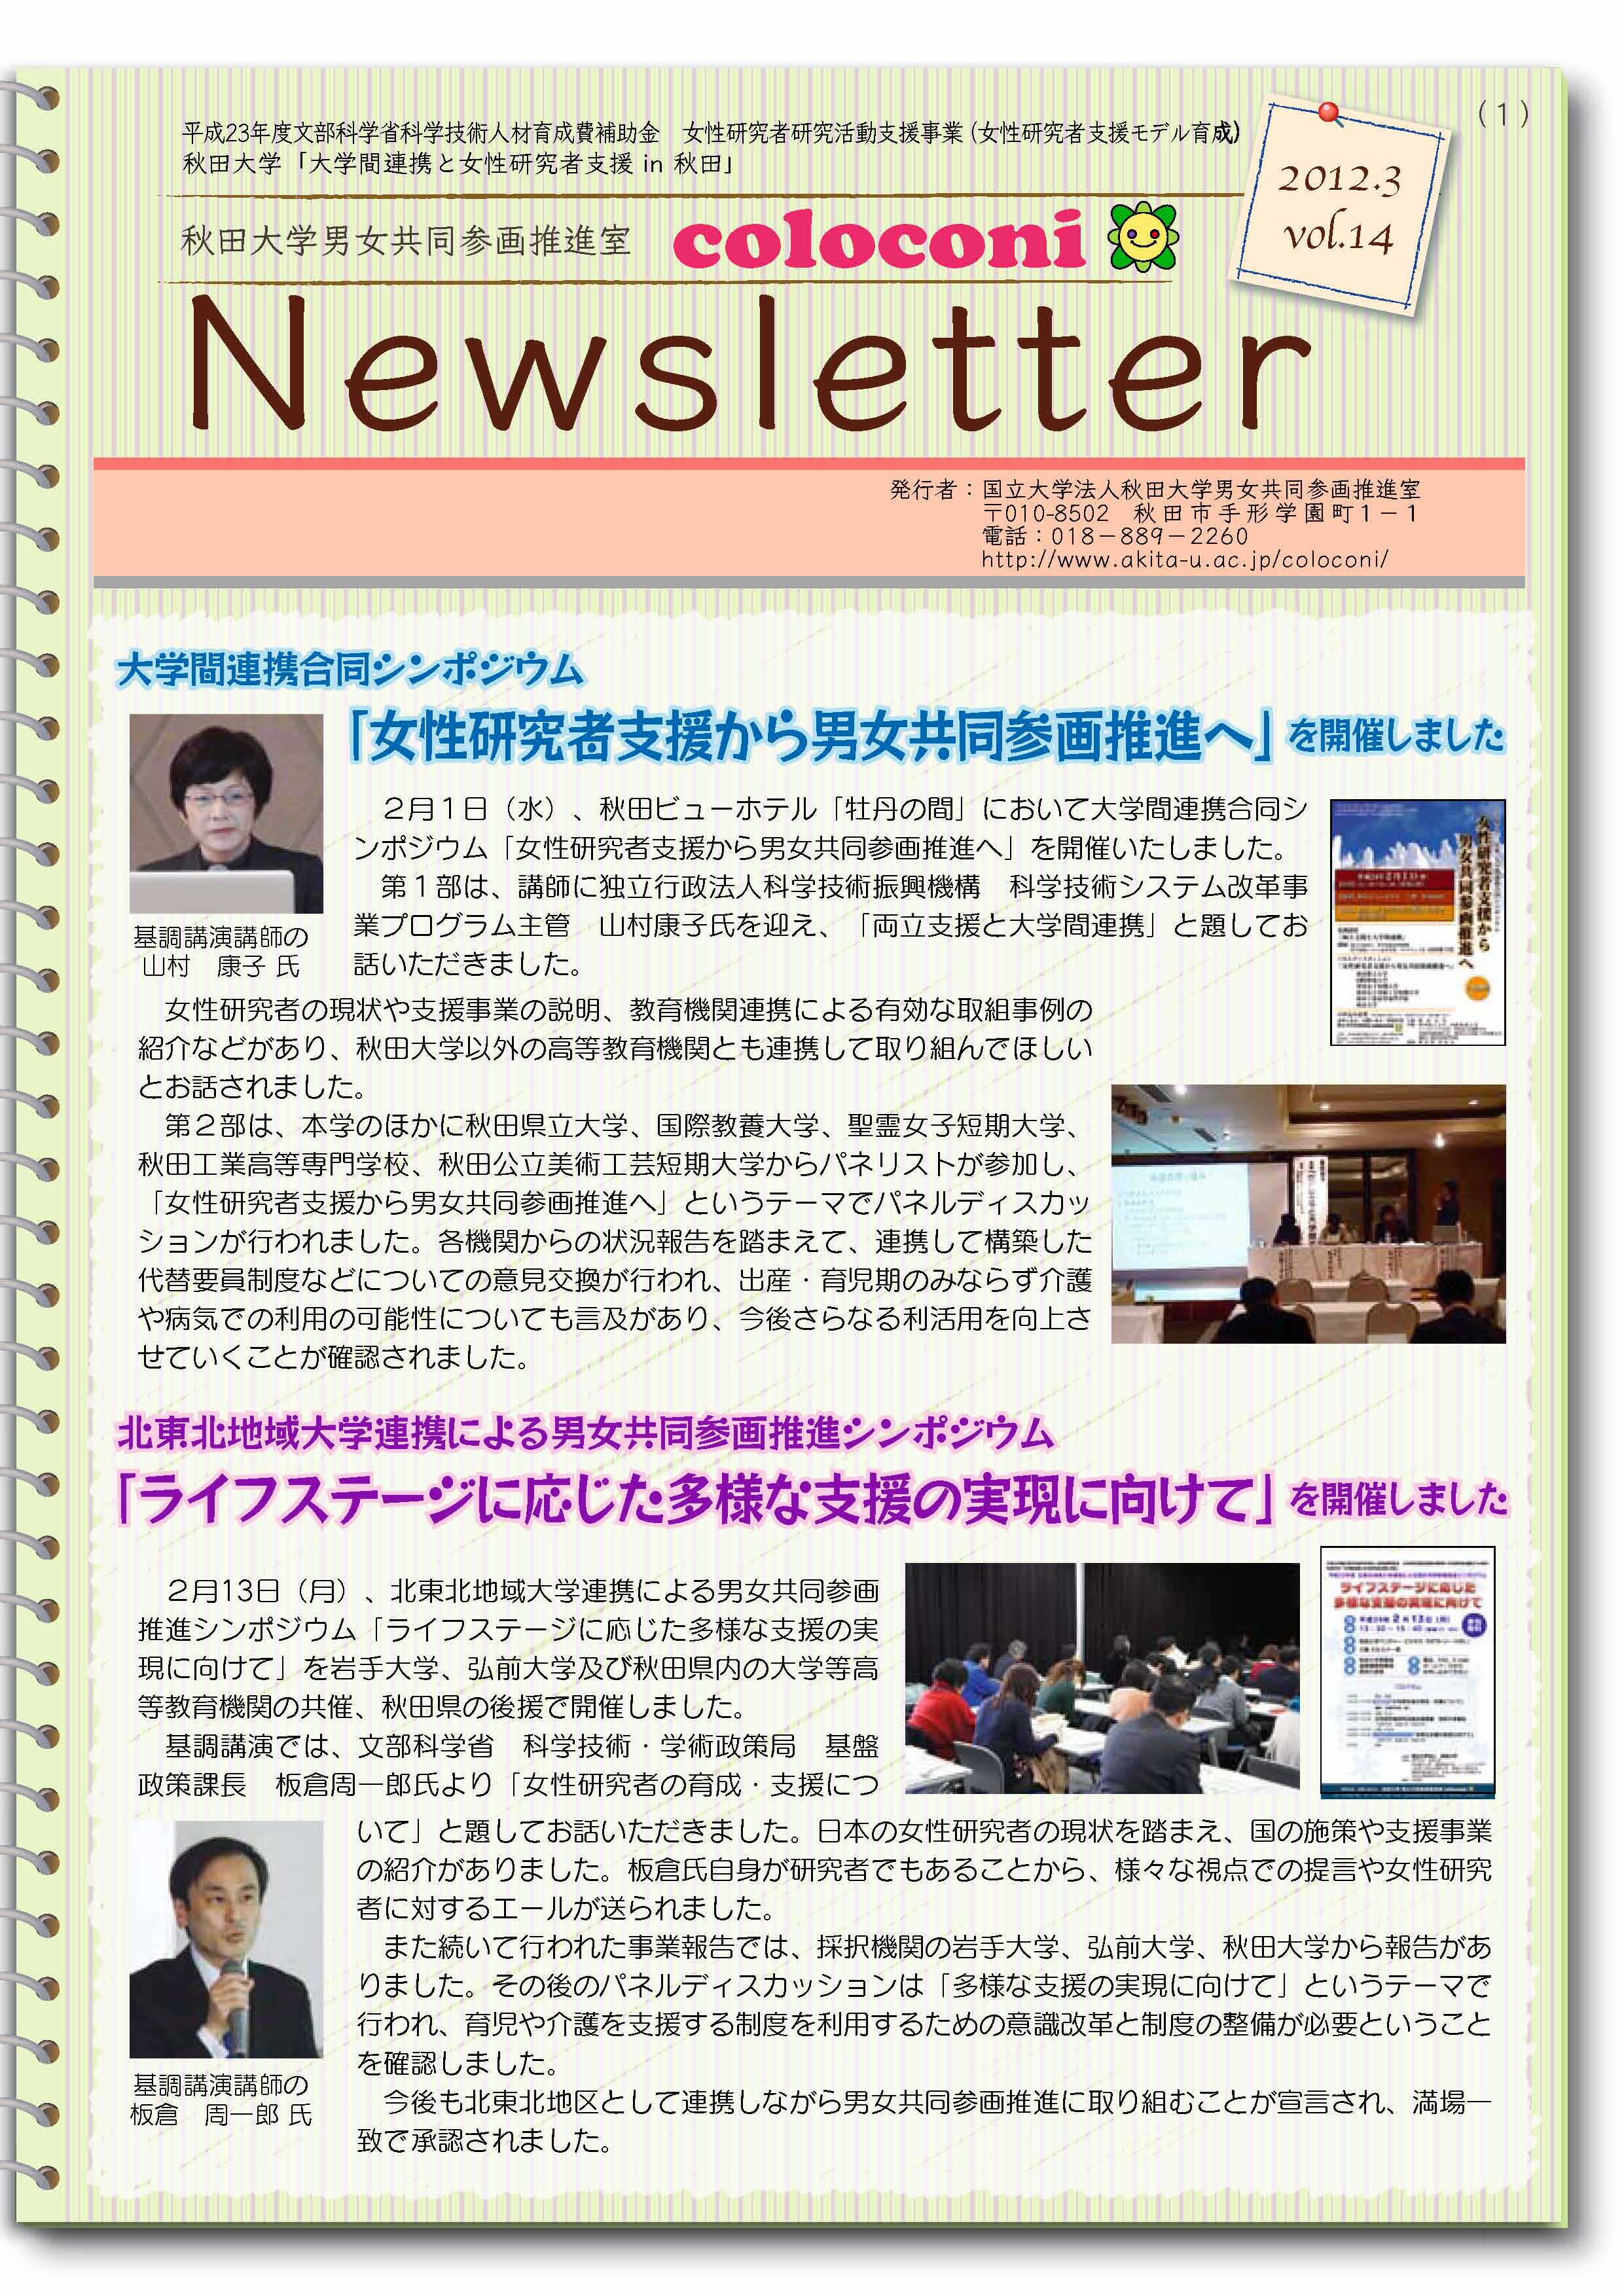 Newsletter　【vol.14 (2012.3)】 